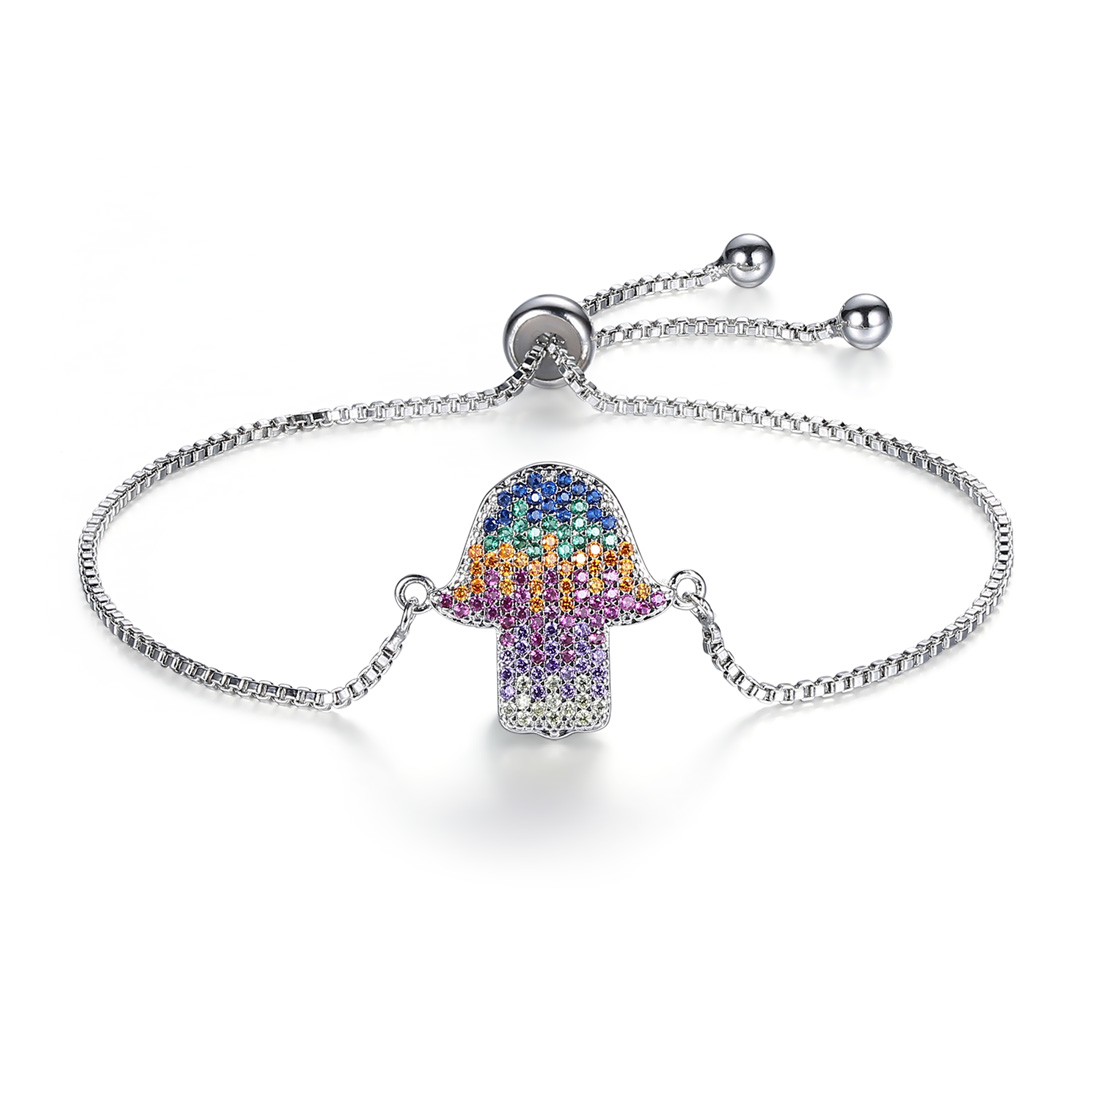 Hand of Fatima Series alloy brass birthday stone adjustable heart slider charm pendant bracelet bangle for gift